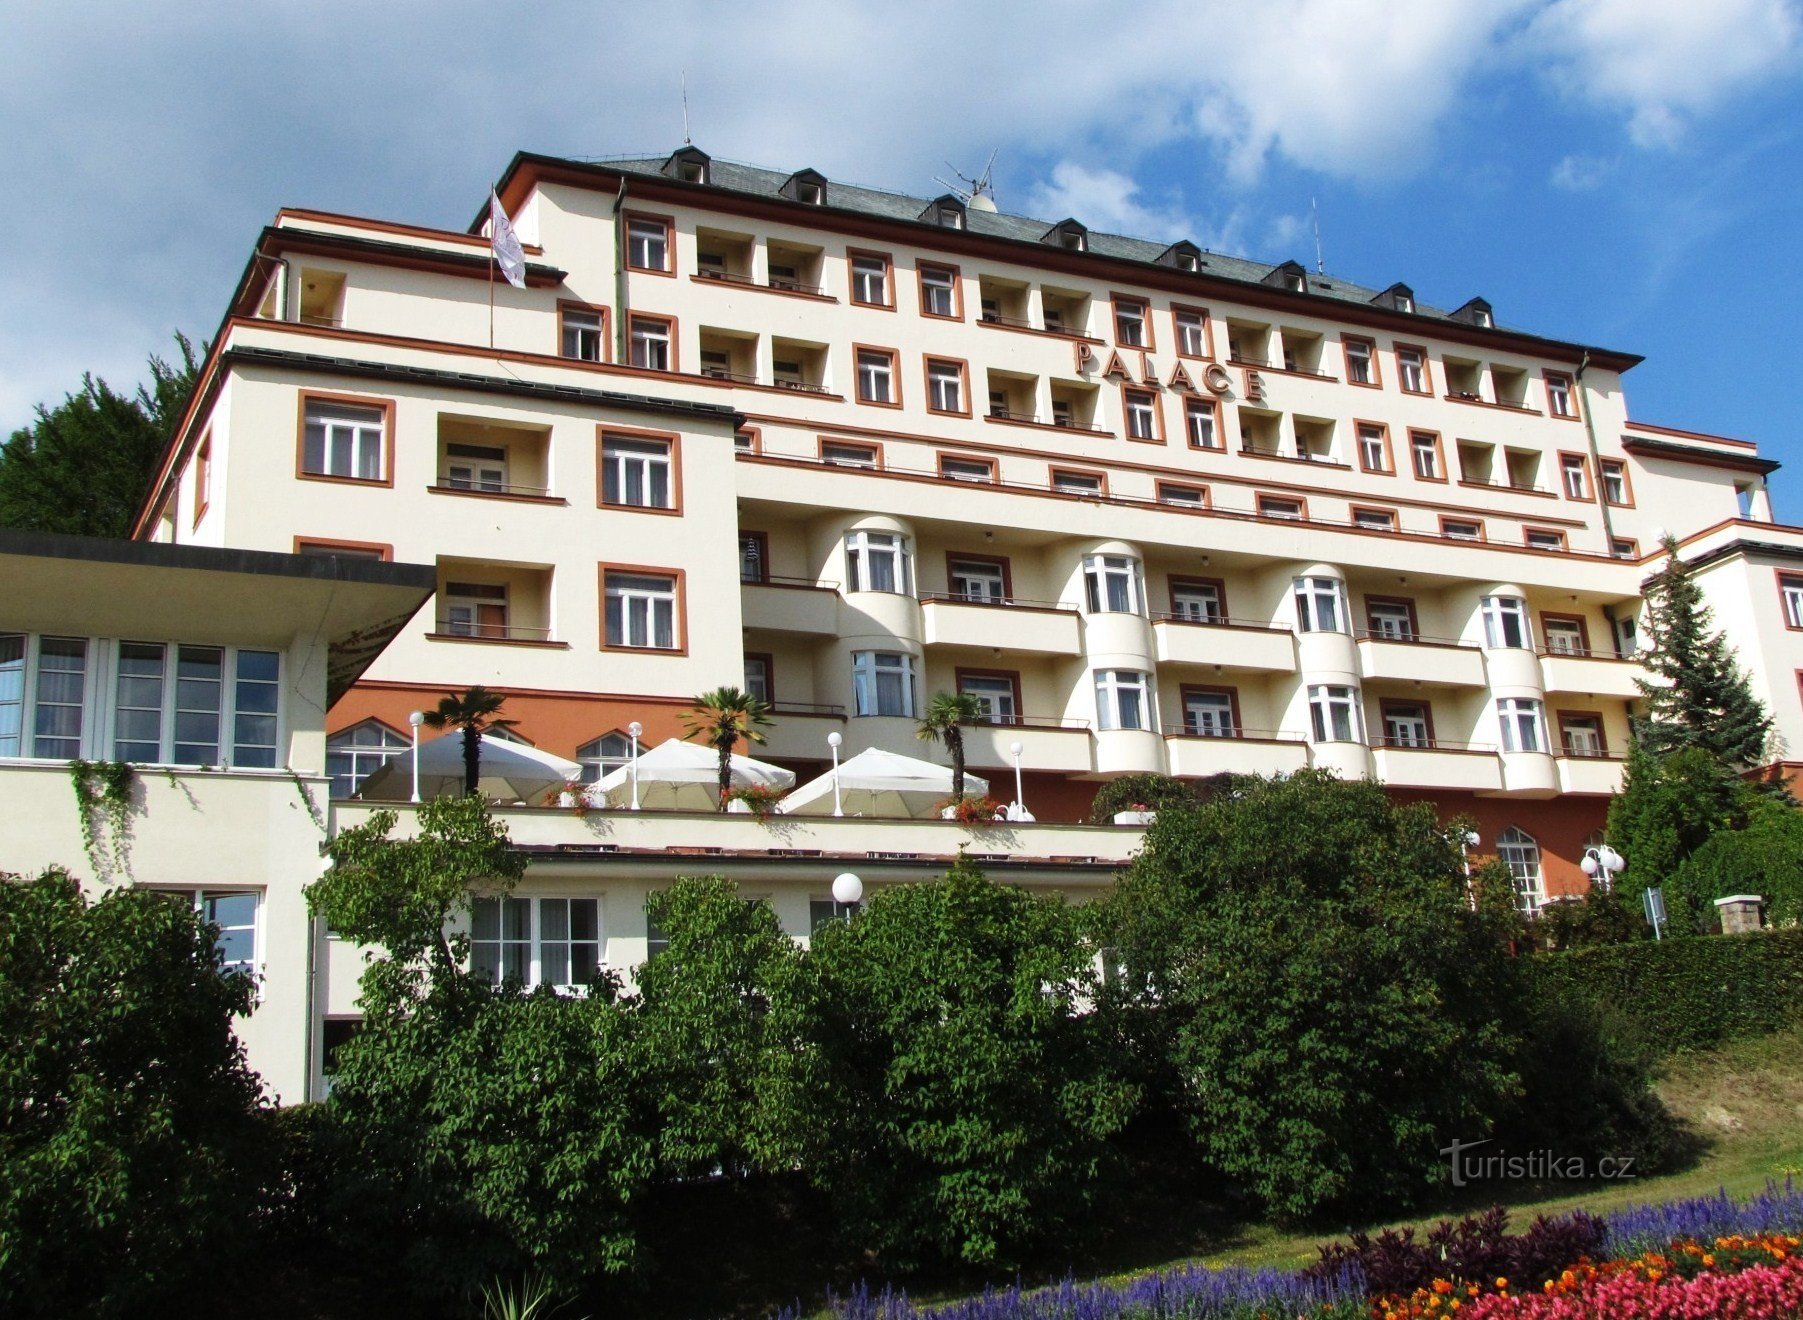 Dominanta Luhačovice - Hotel pałacowy